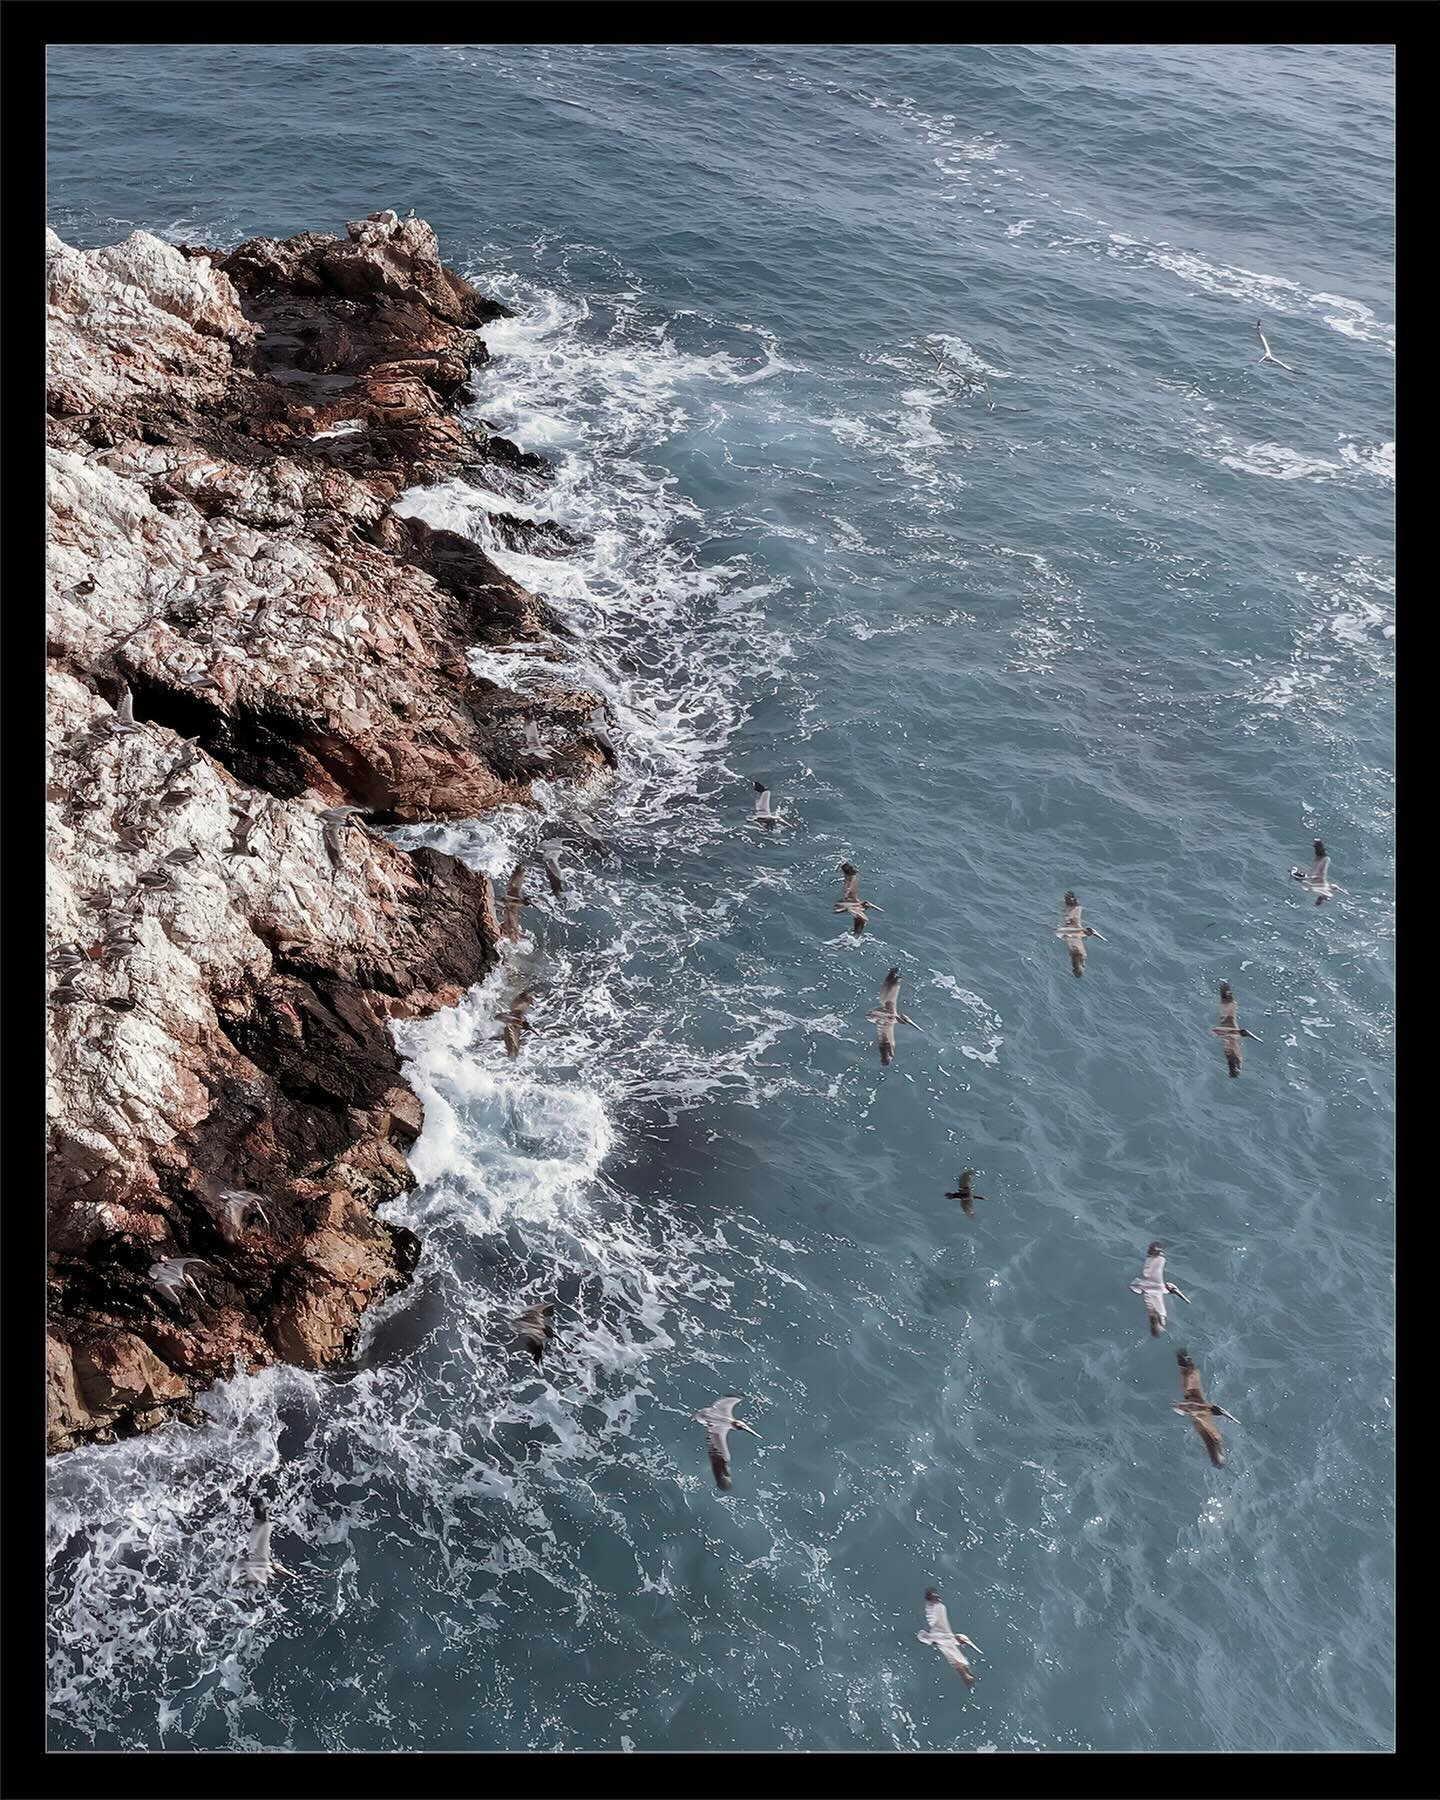 Pelicans at White Rock | Pismo Beach, CA | #pismobeach 

35.163374&deg; N, 120.709762&deg; W

DJI Inspire 2/Zenmuse X5/Polar Pro ND8

#pismo #pelicans #beachbirds #whiterock #centralcoast #centralcoastcalifornia #djiglobal #djiinspire2 #dronephotogra